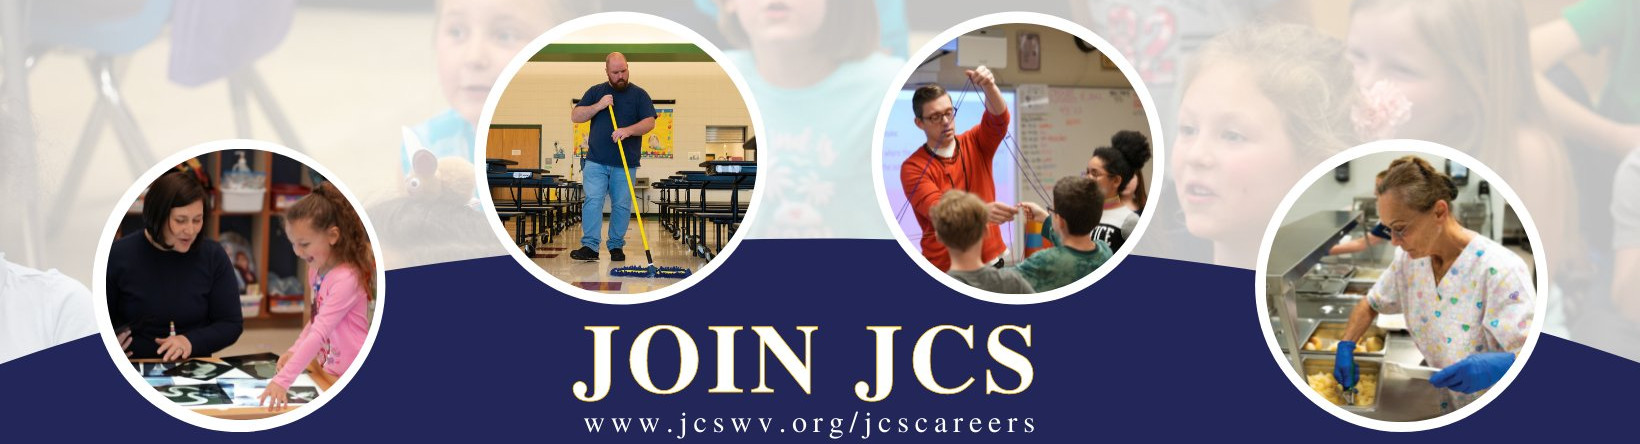 Join JCS Banner